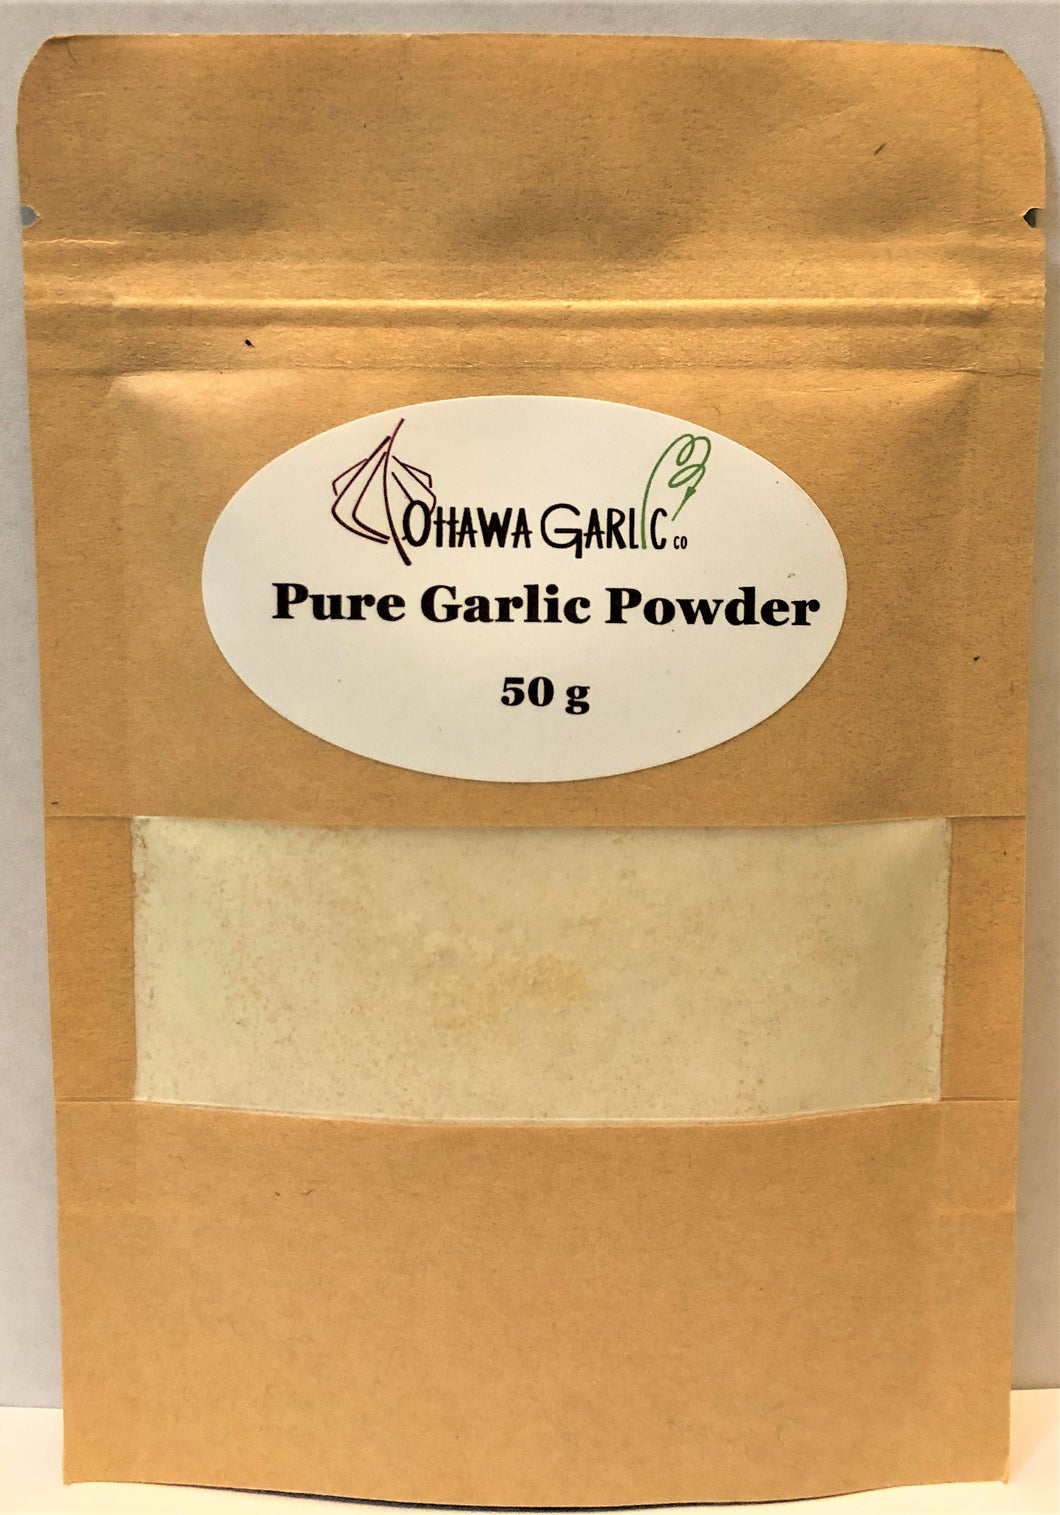 Pure Garlic Powder - 50g Pouch